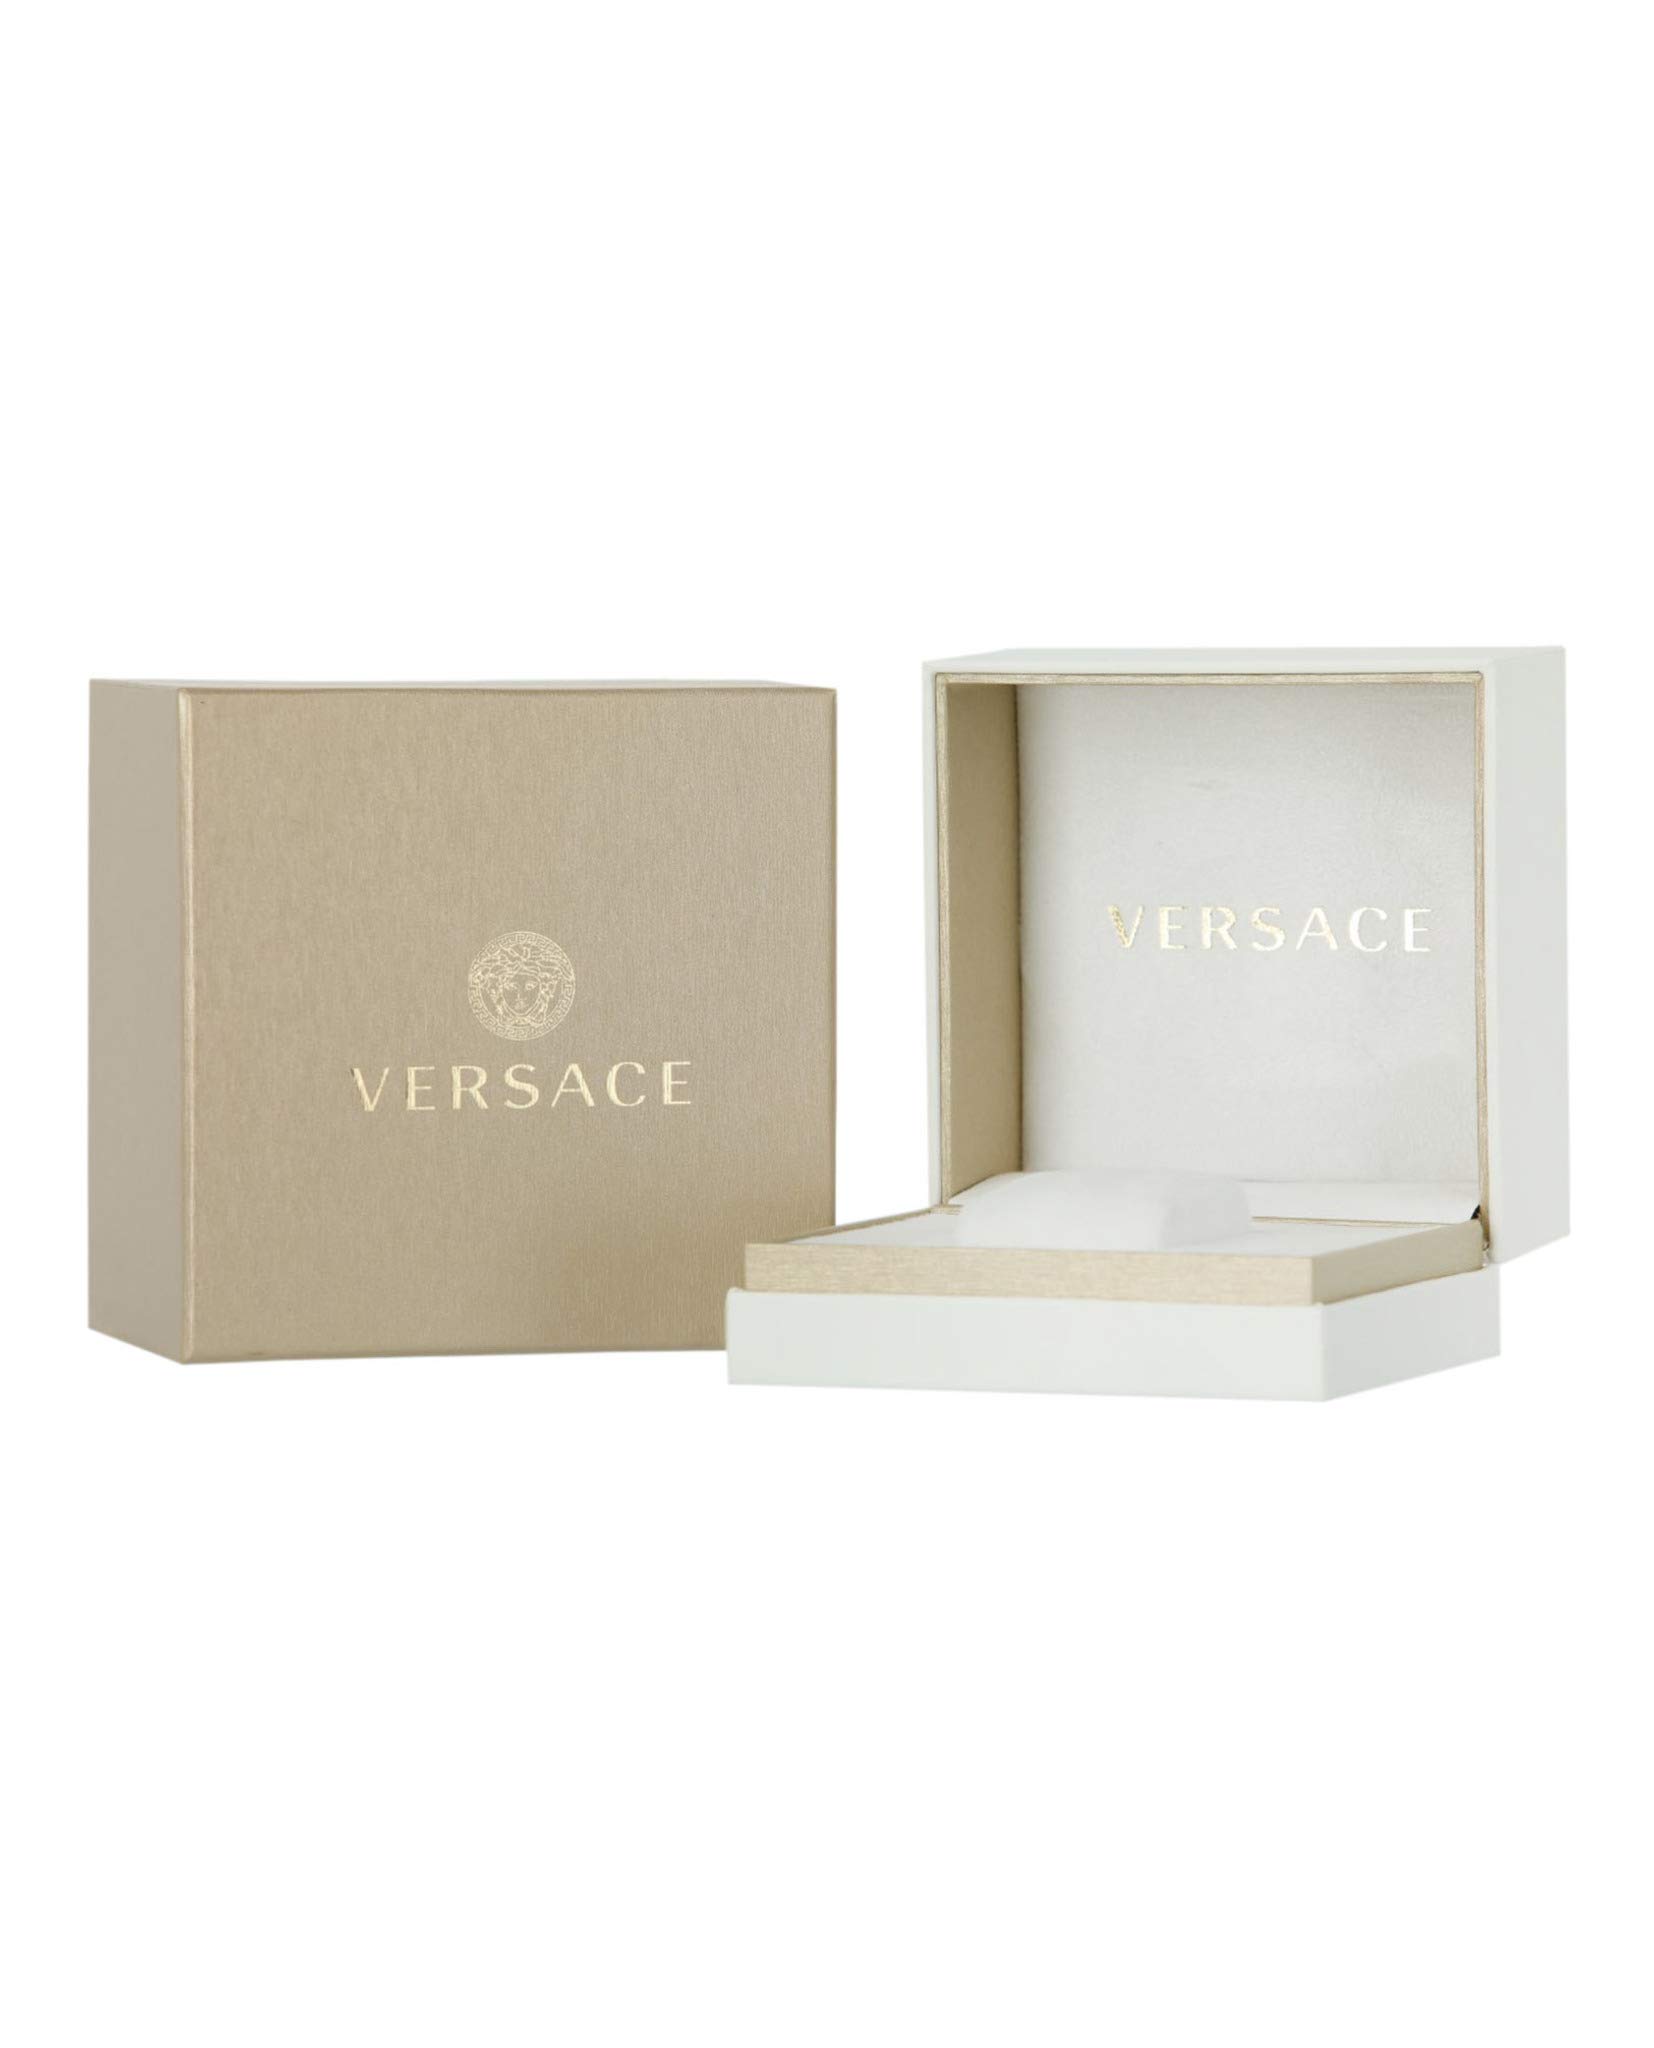 Versace Womens Champagne 38 mm Shadov Watch VEBM00618